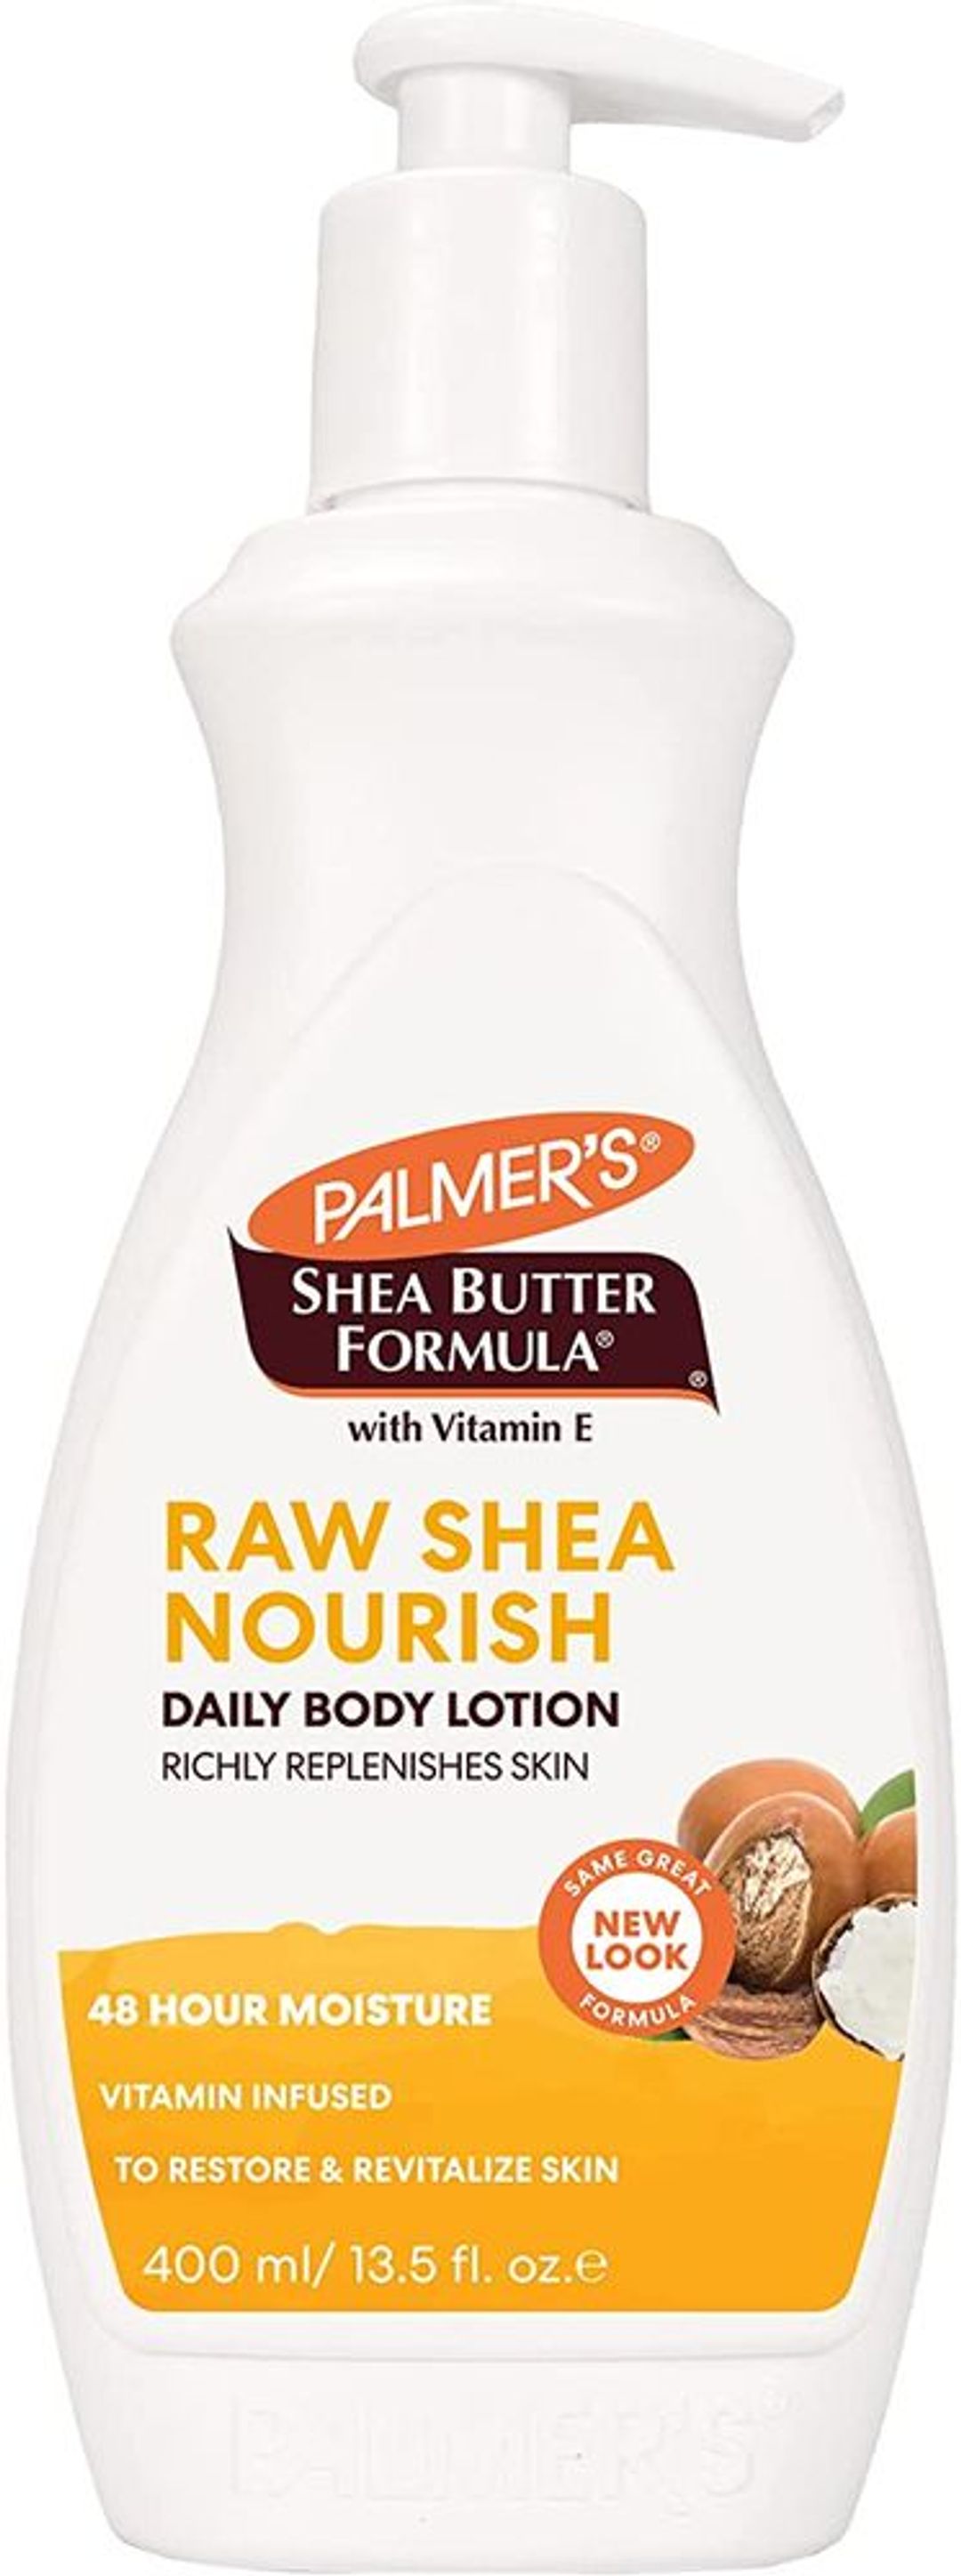 Palmer's Raw Shea Nourish Daily Body Lotion - 400ml